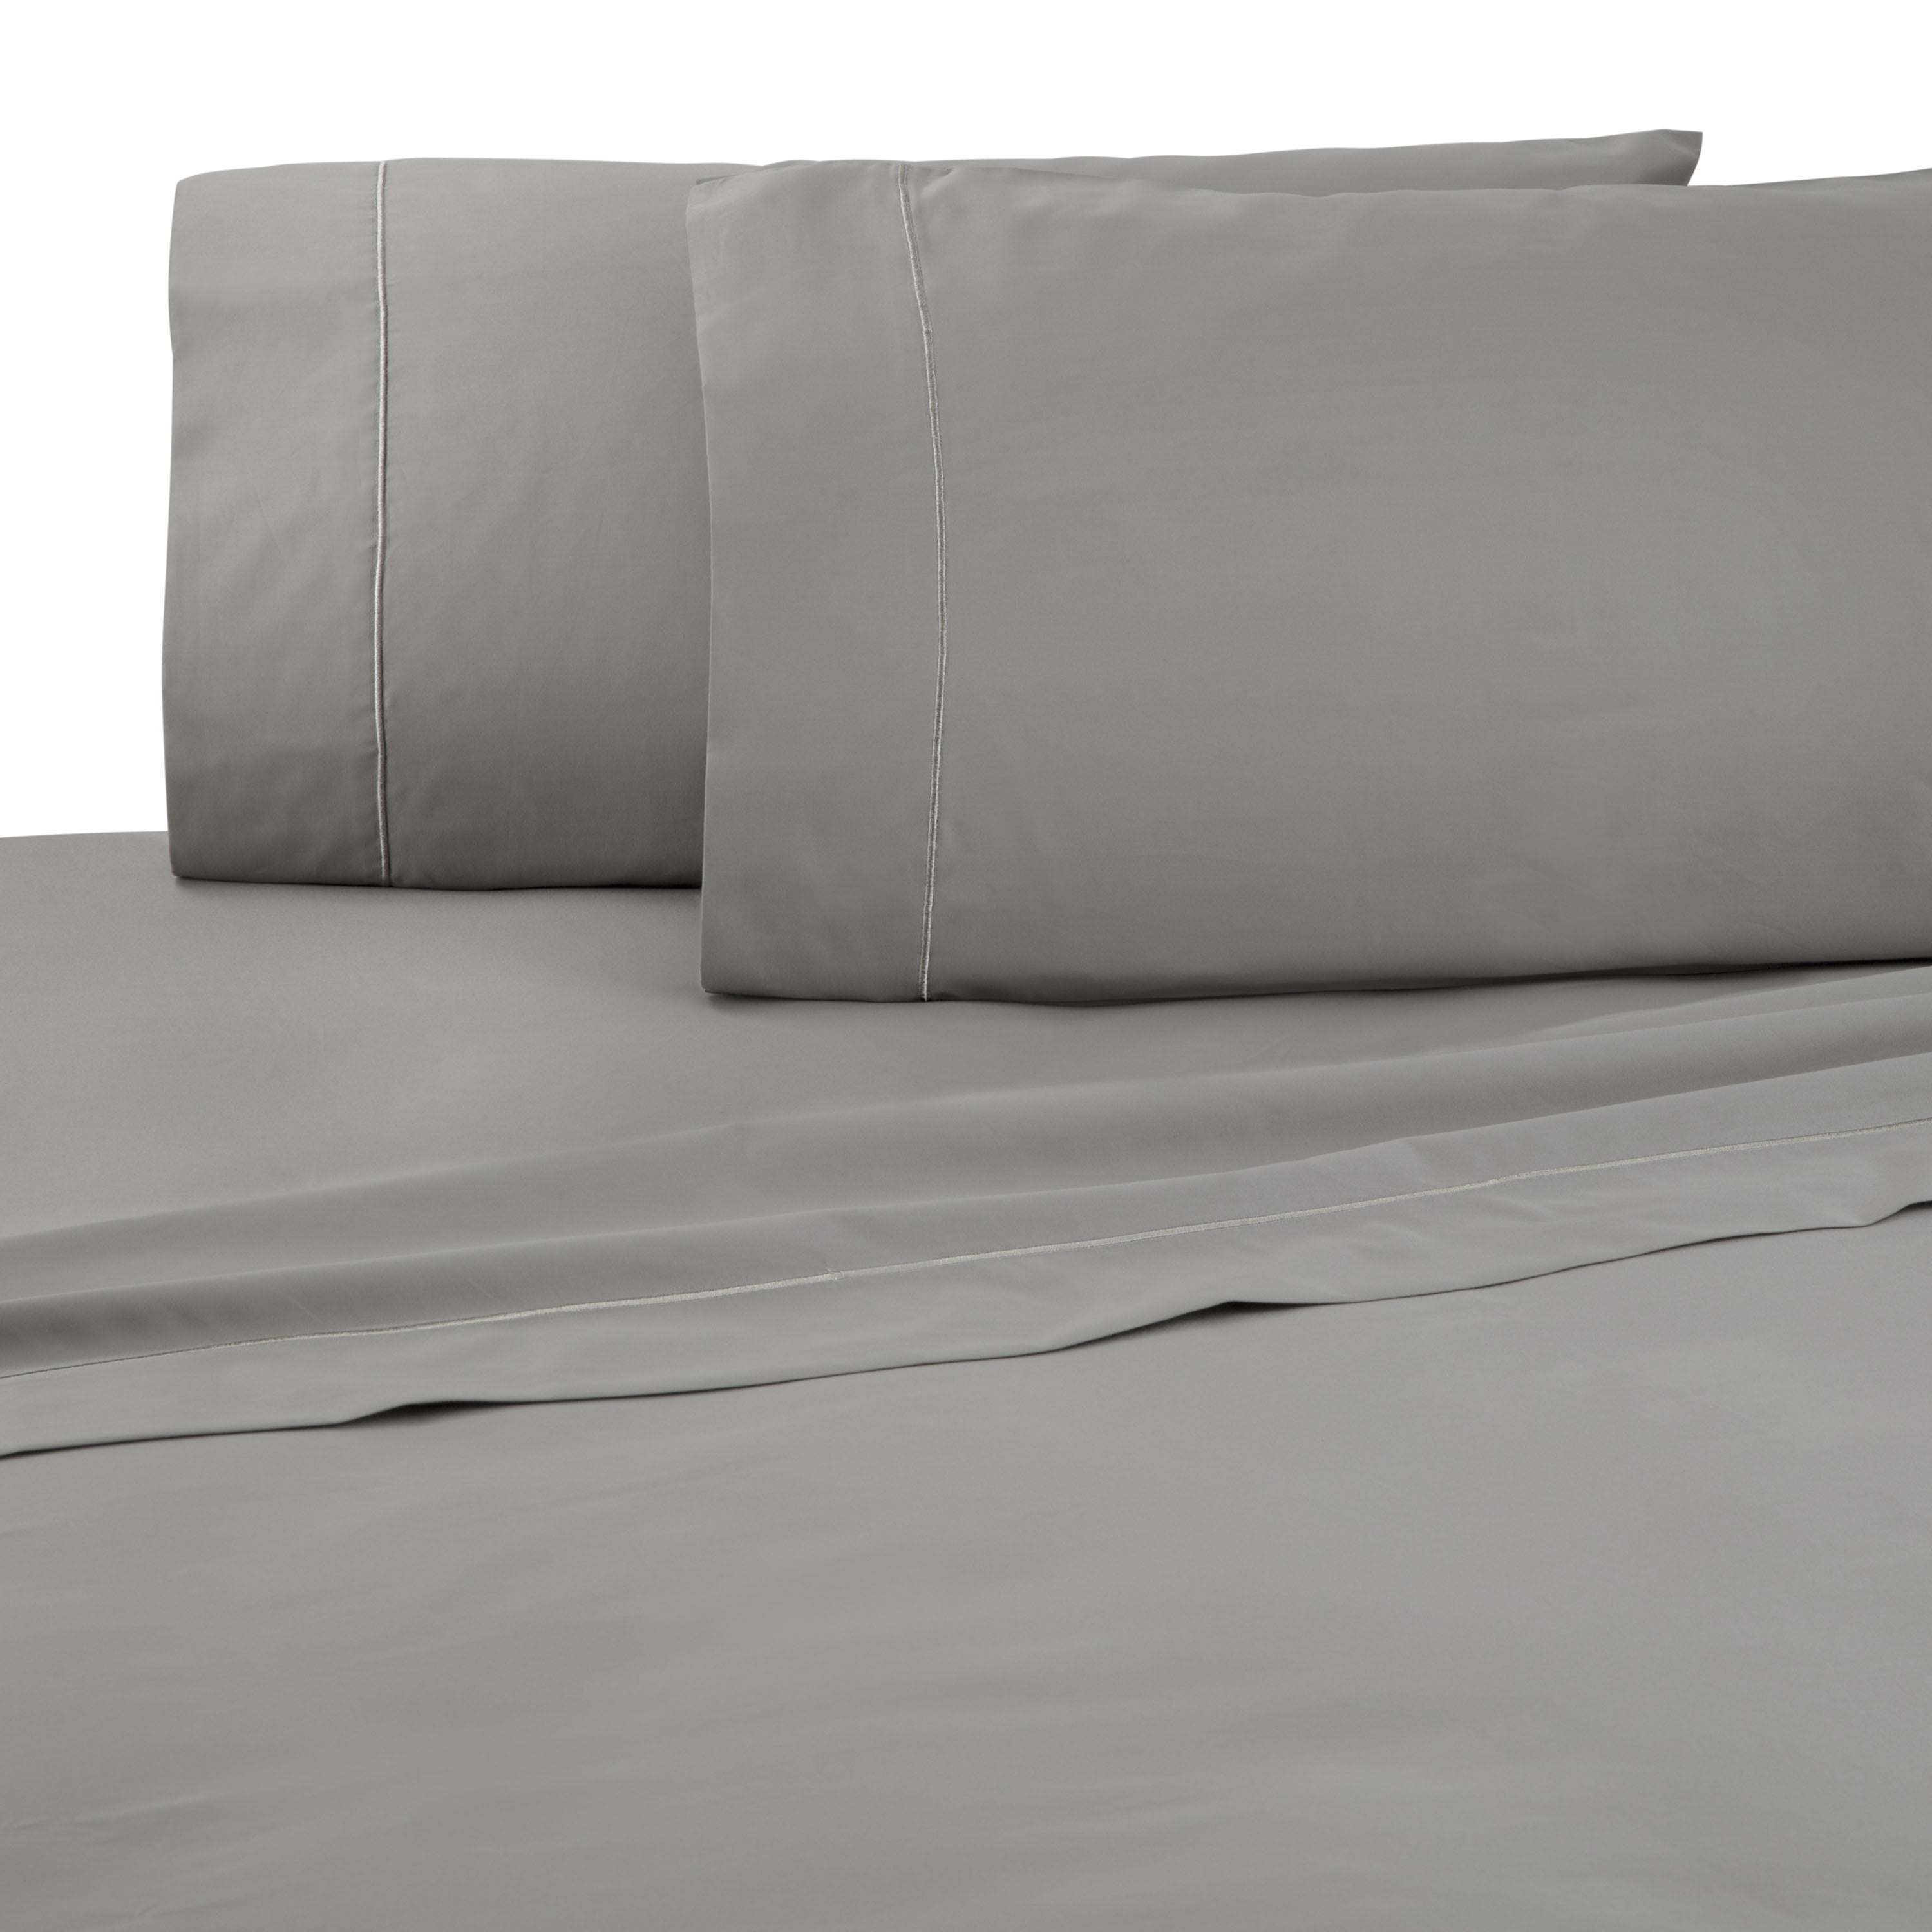 Martex BLACK STANDARD Pillowcases Set 400 Thread Count 100% Cotton 20 x 30 inch 